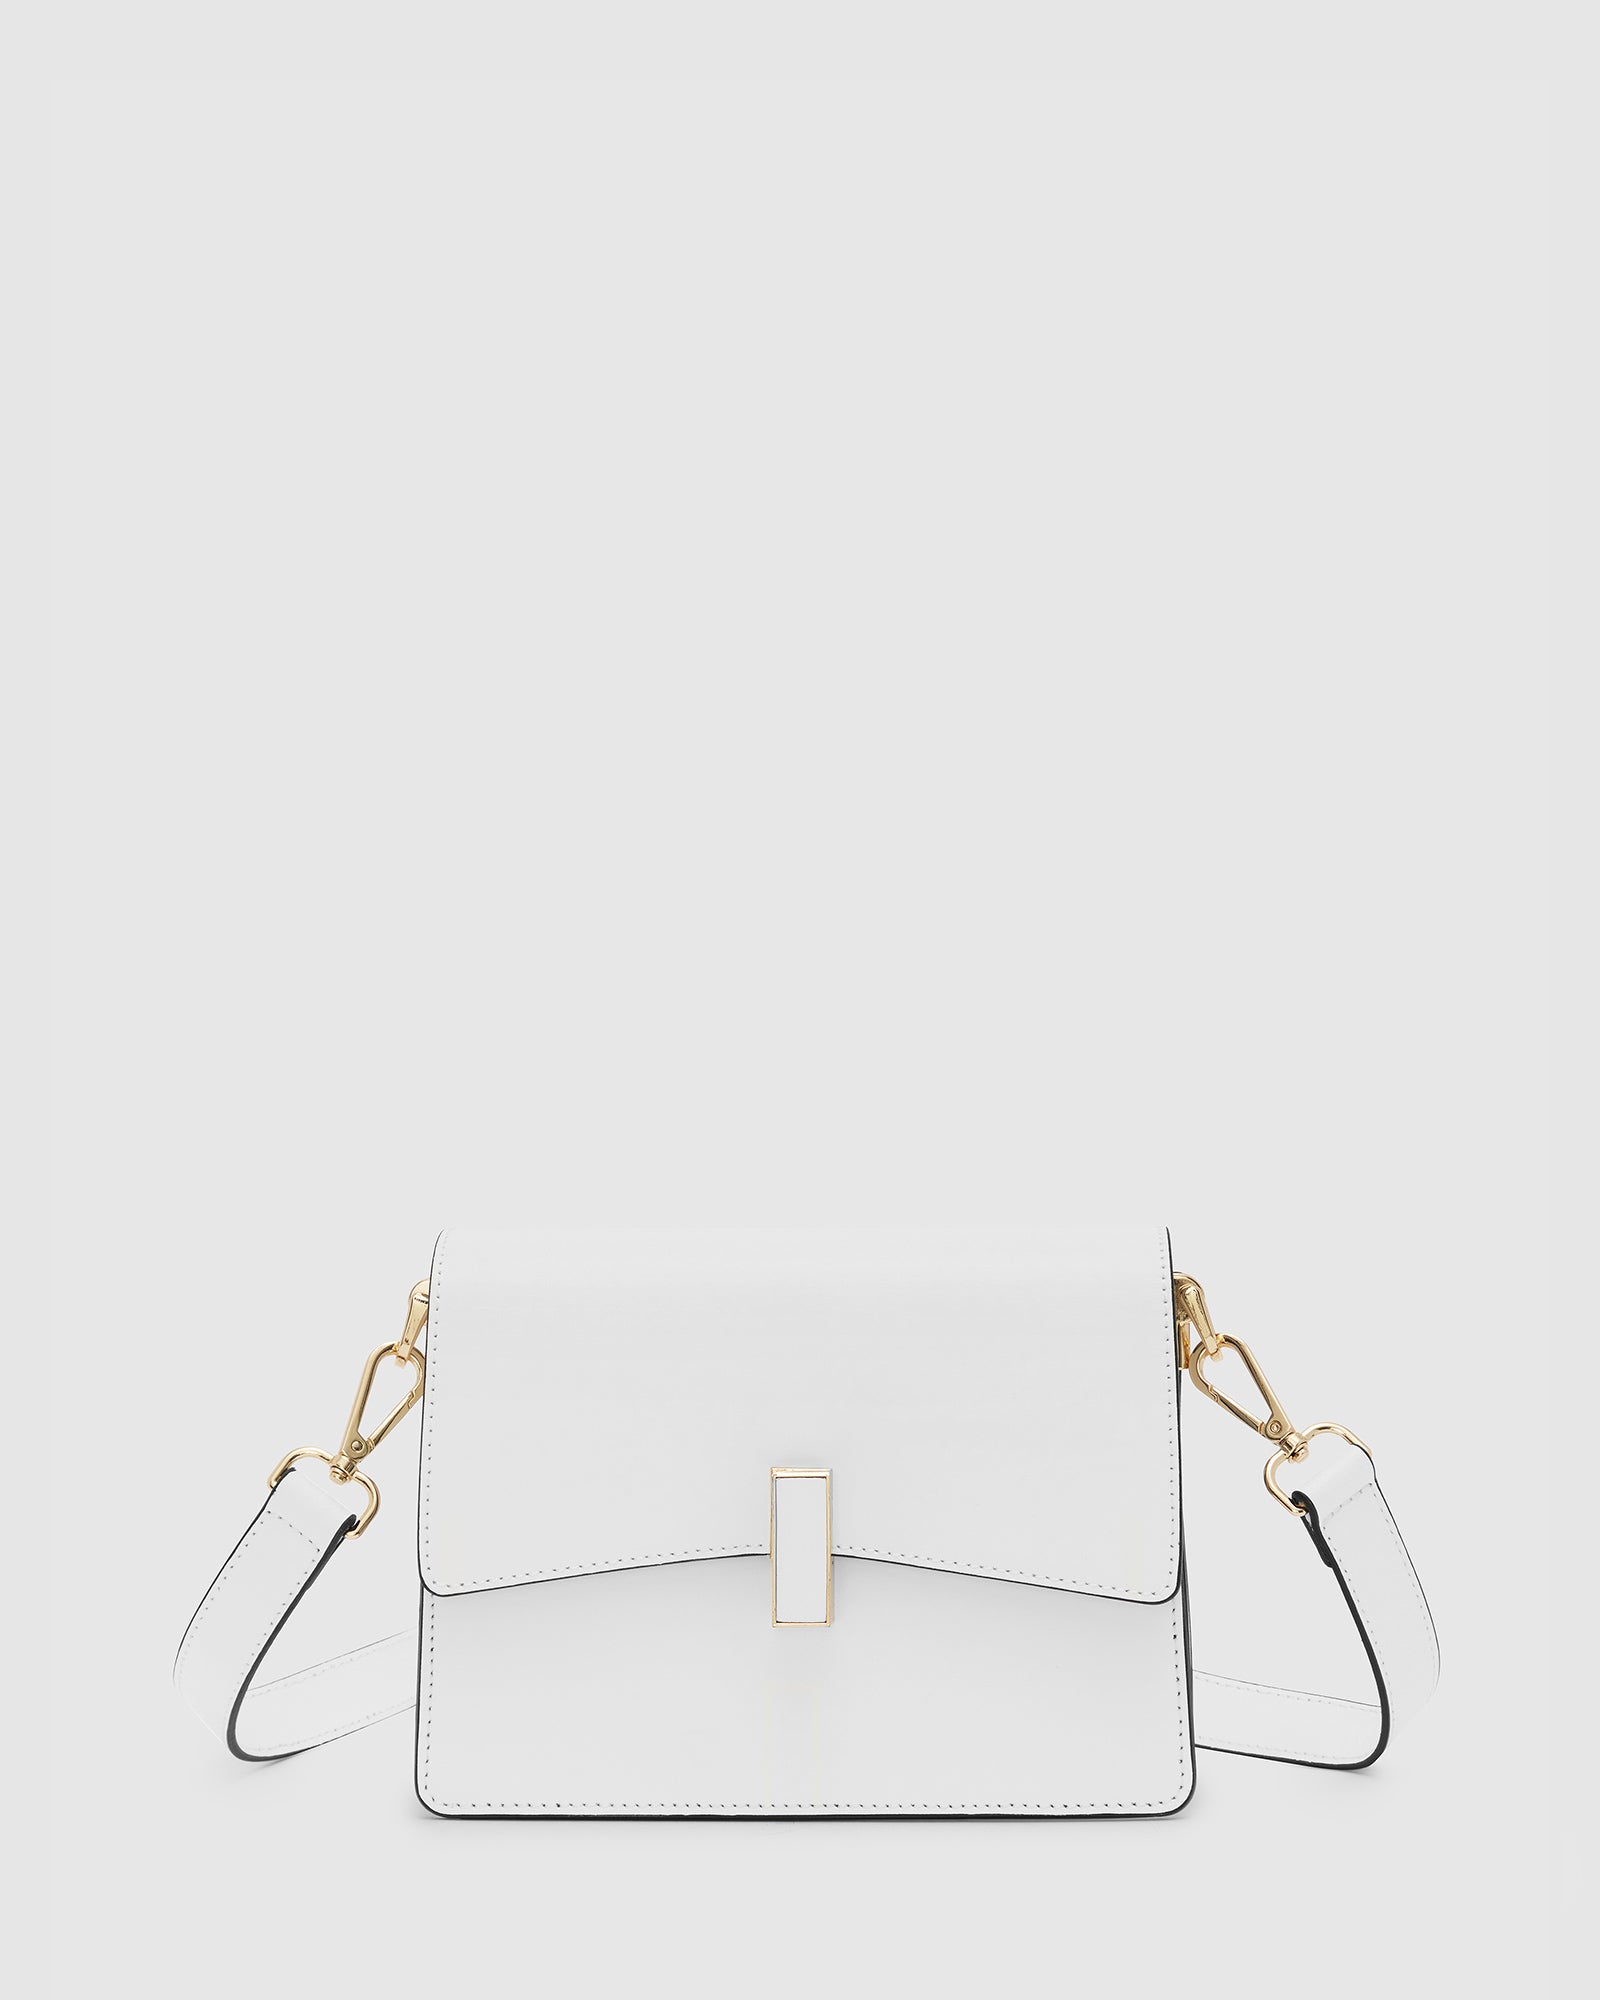 Annabel Tan - Leather Crossbody Bag - Republic of Florence